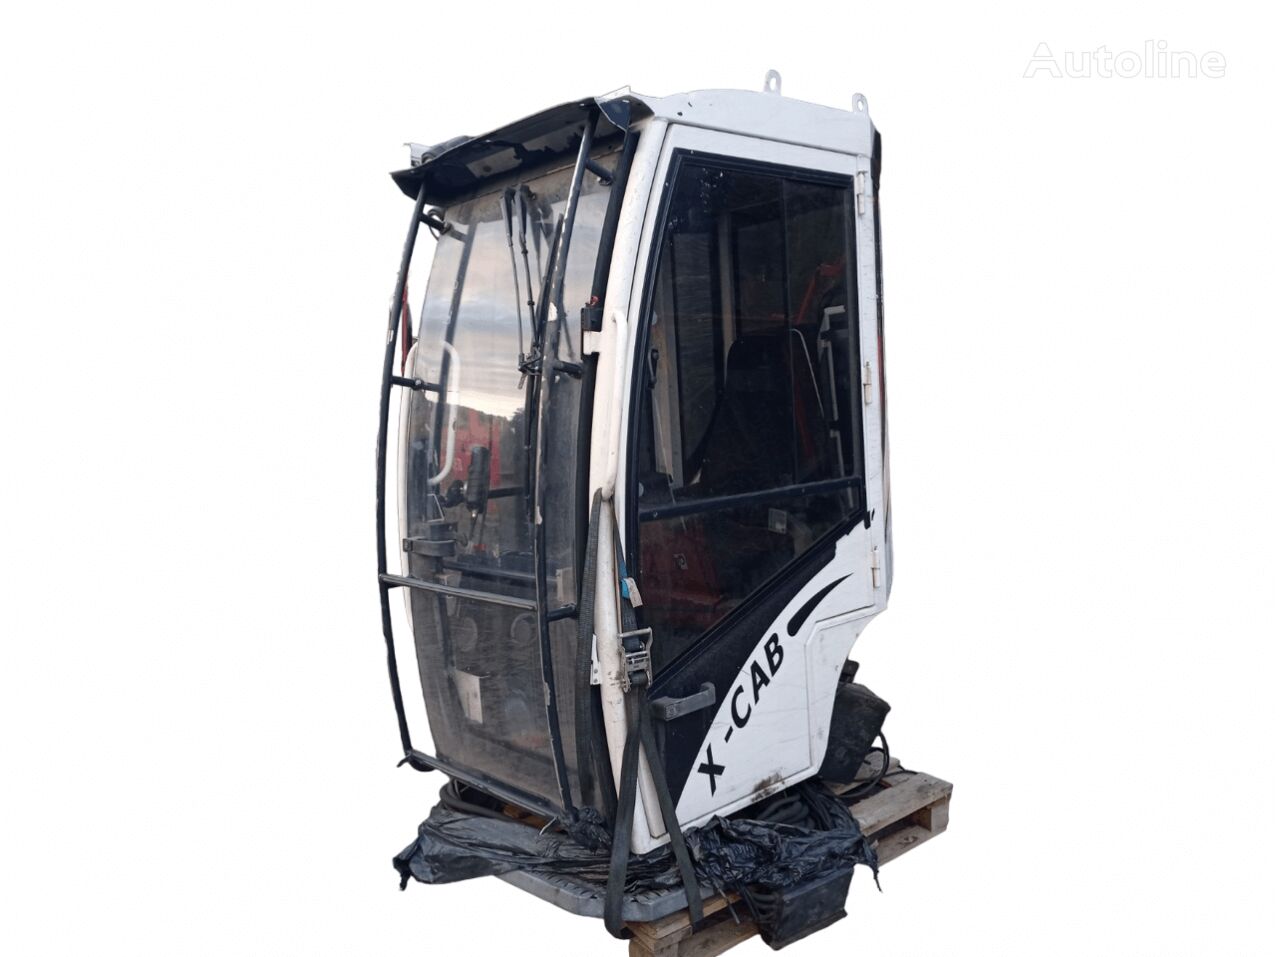 Xcab cabin for Epsilon Loglift, Kesla, Pen loader crane